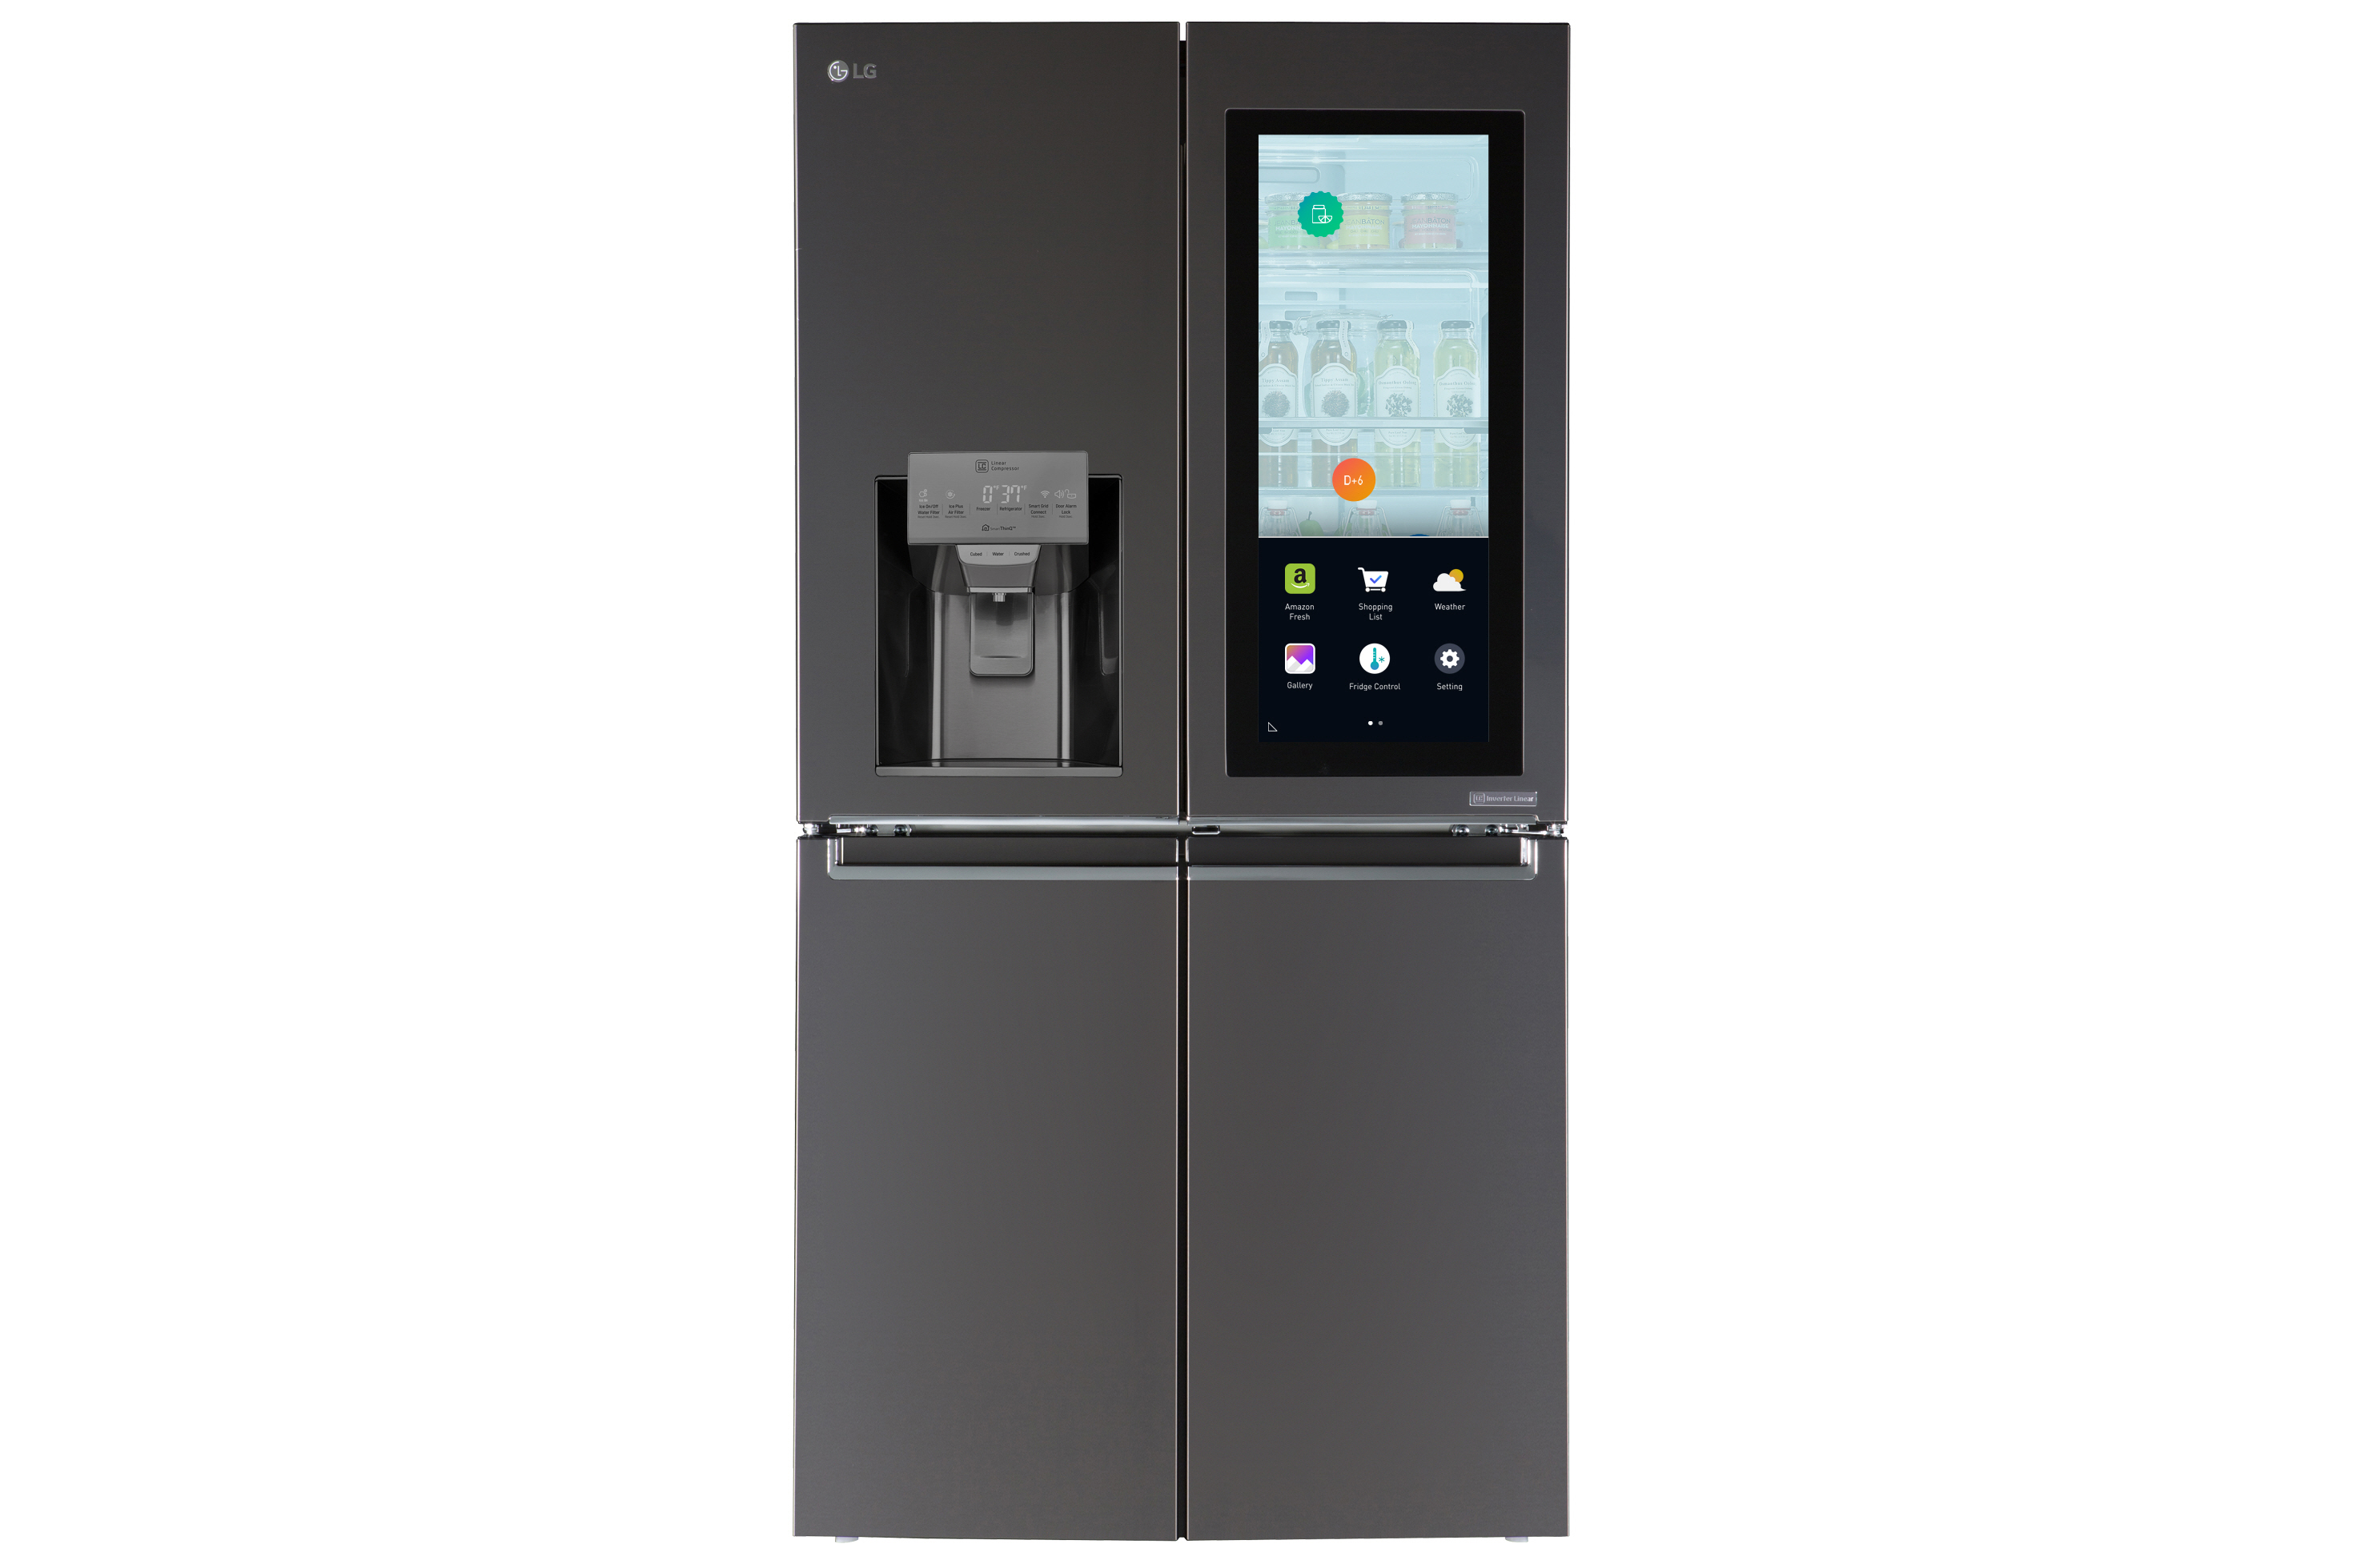 LG Smart Instaview Refrigerator 01